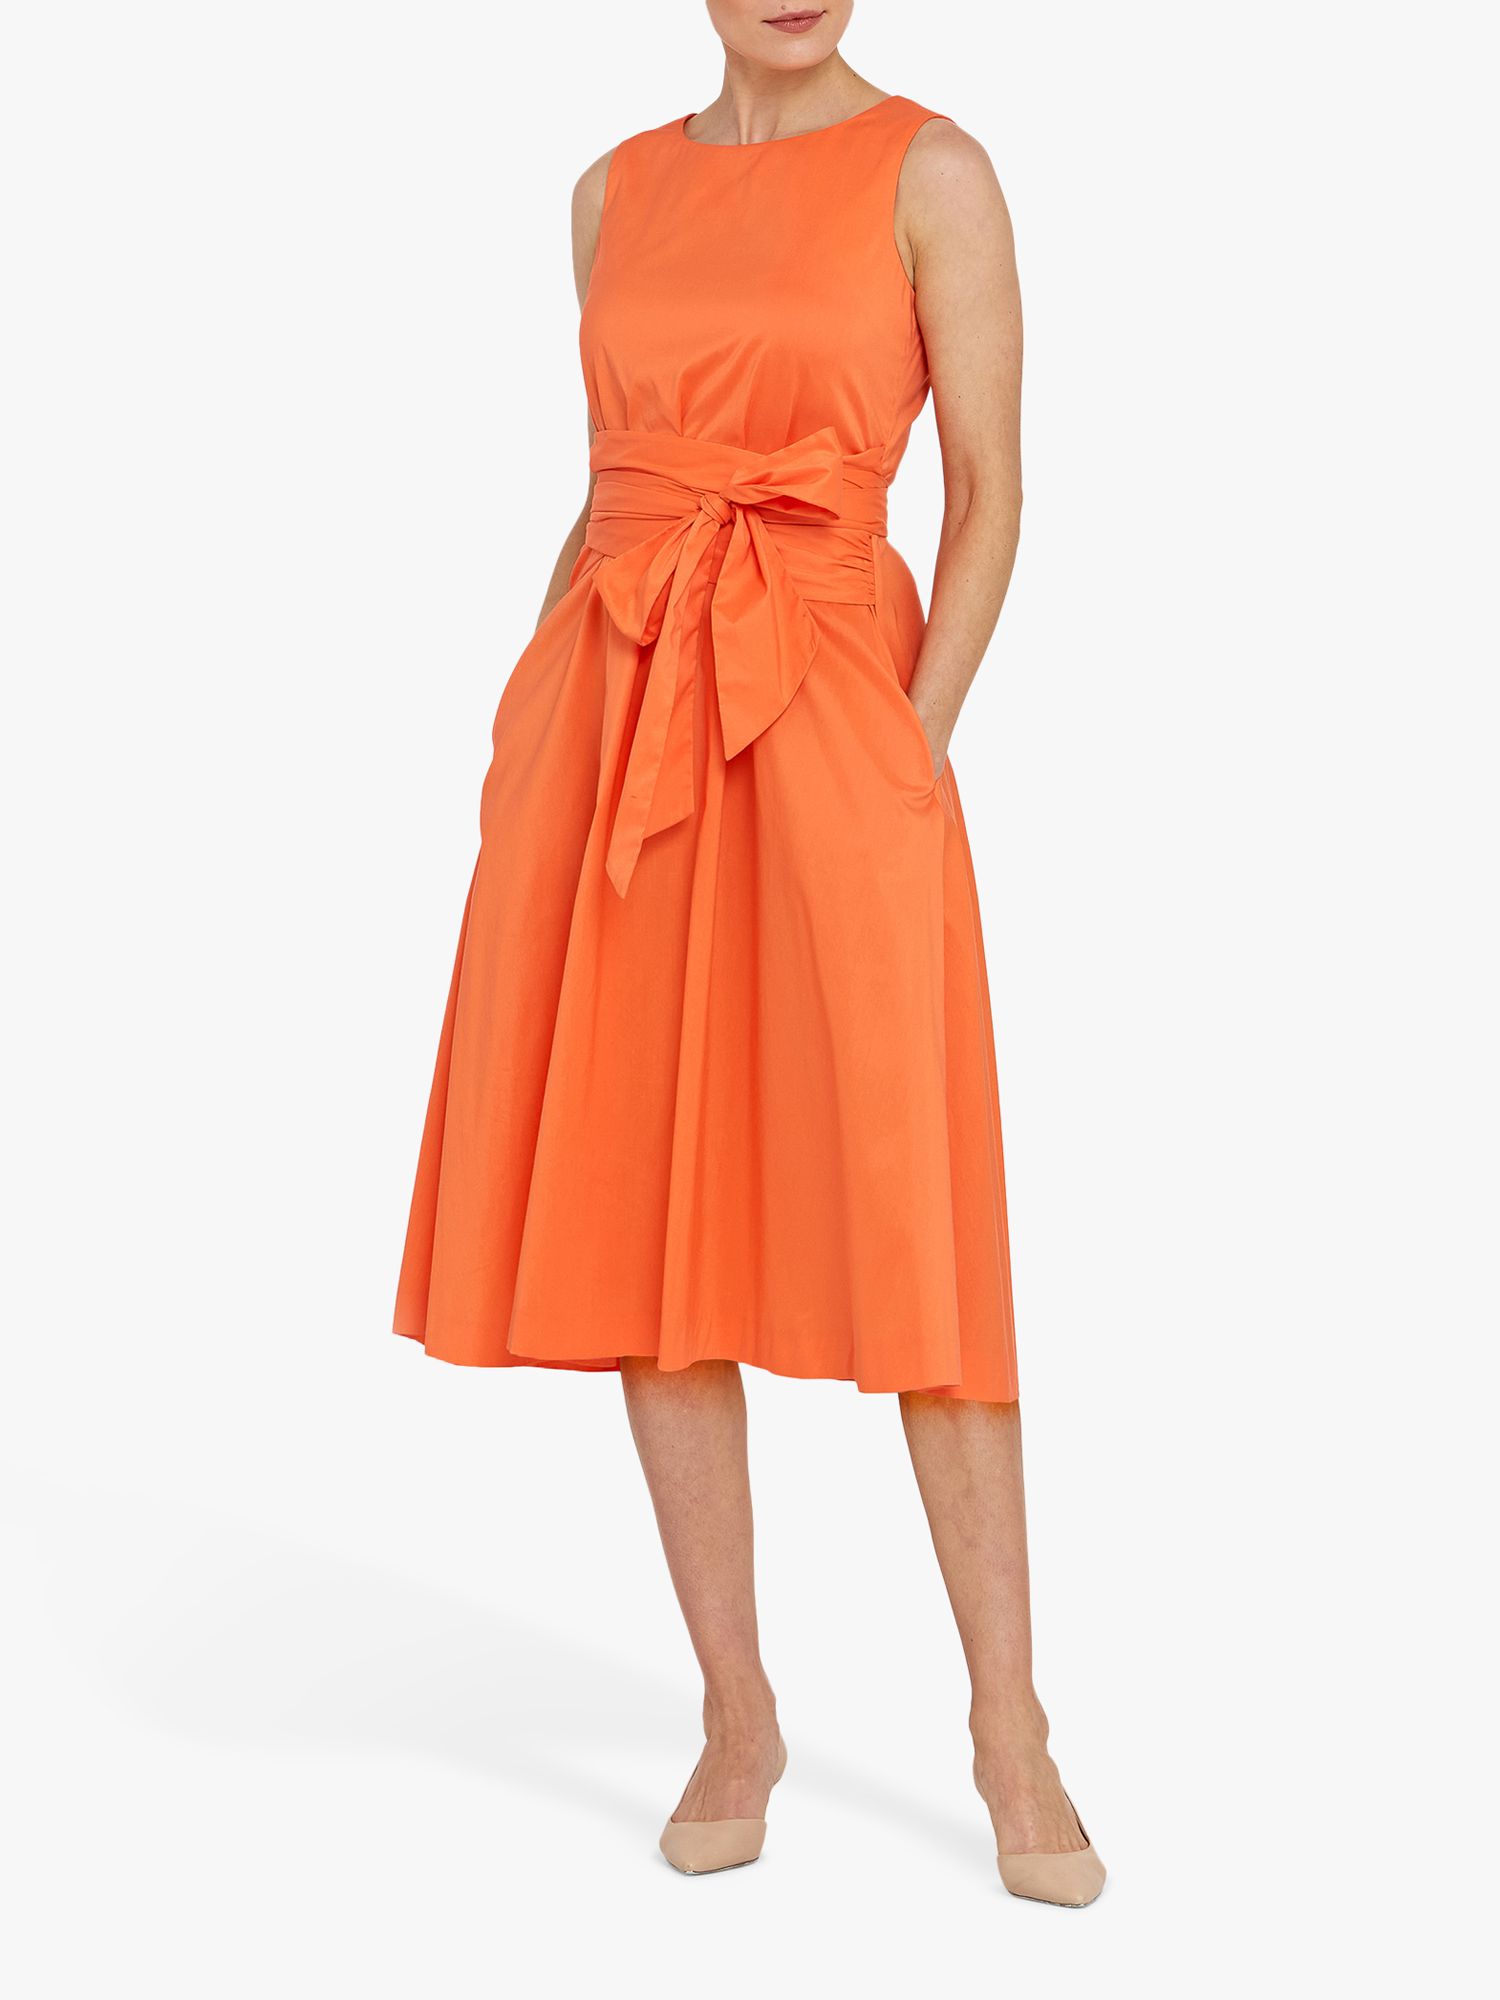 Helen McAlinden Avril Tie Midi Dress, Orange at John Lewis & Partners